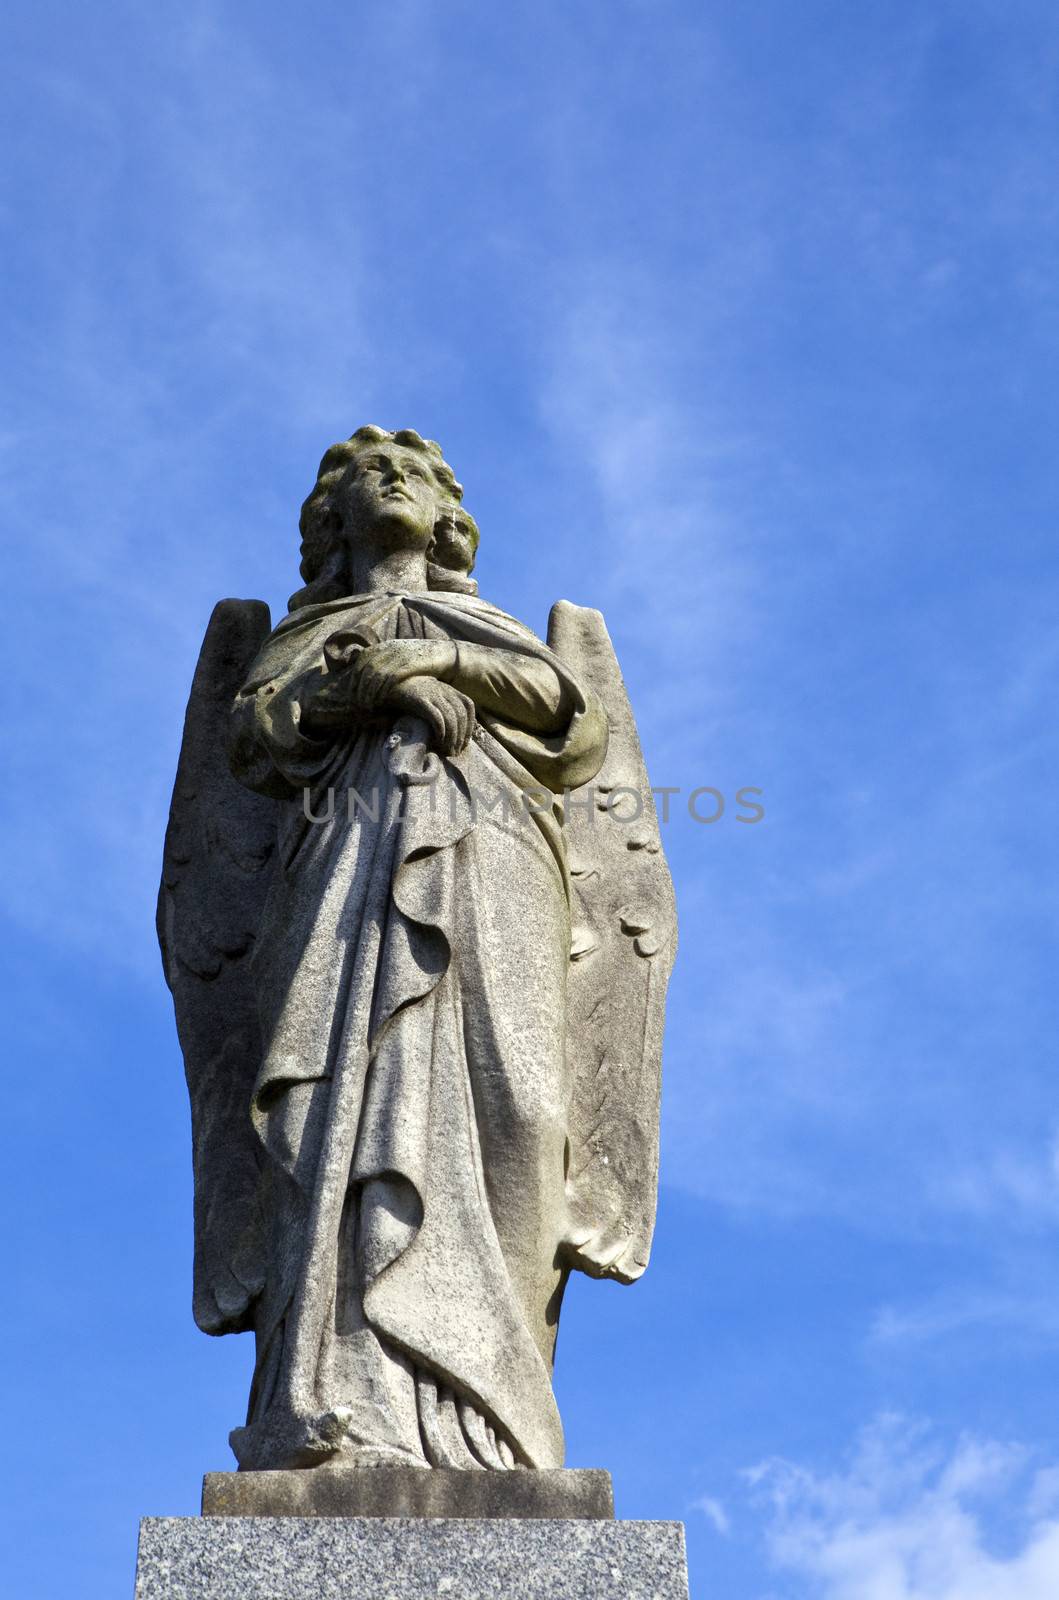 An Angel statue in a London graveyard.